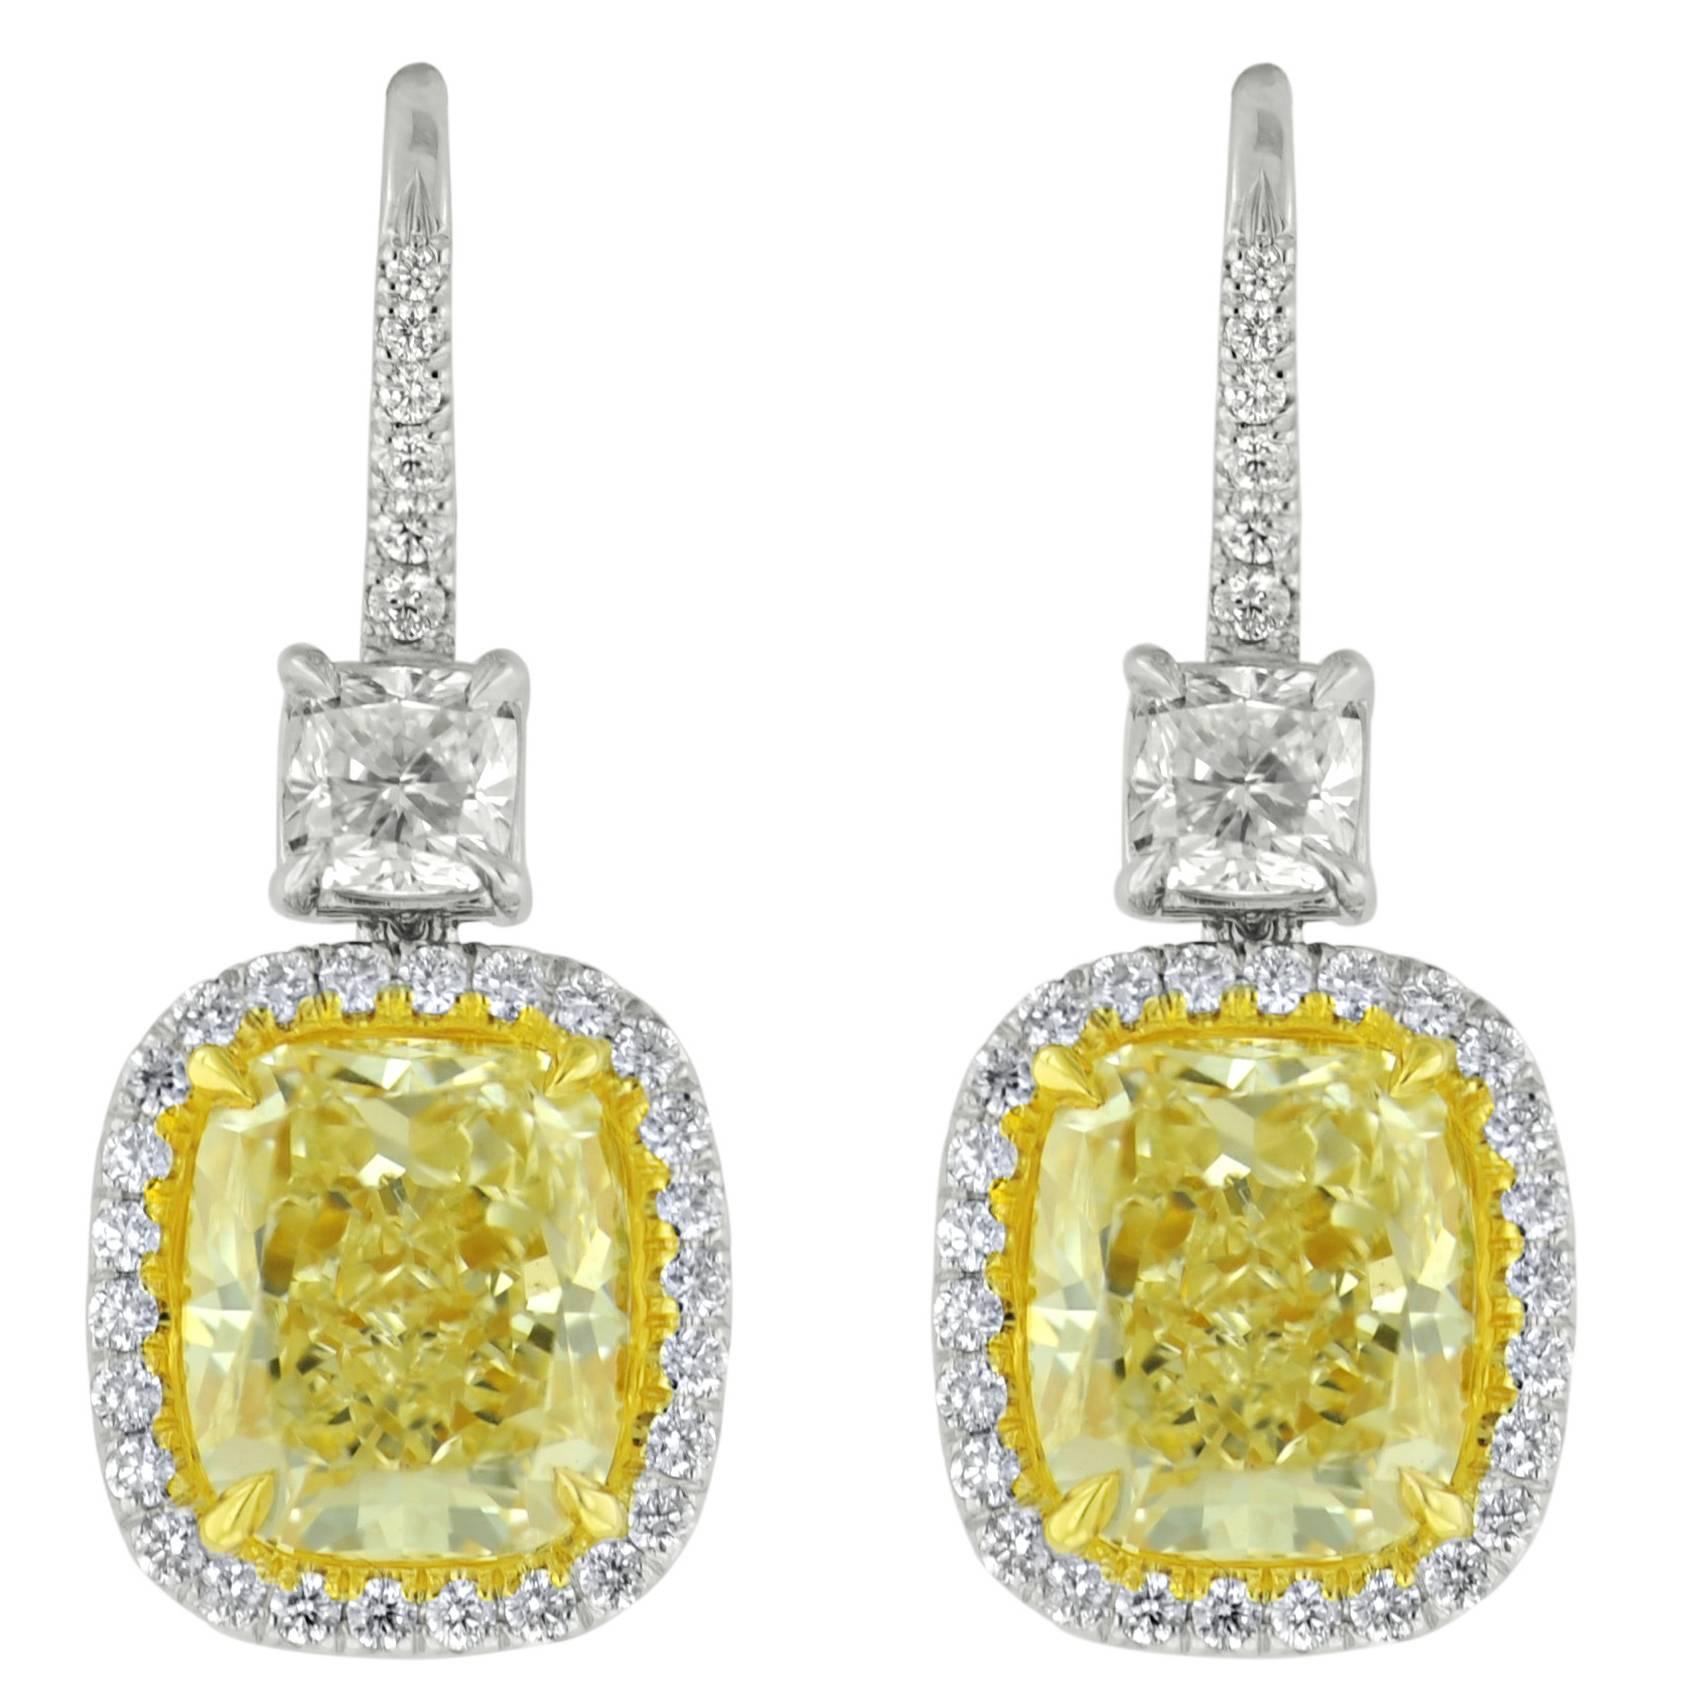 8.22 Carat Canary Yellow Diamond Earrings